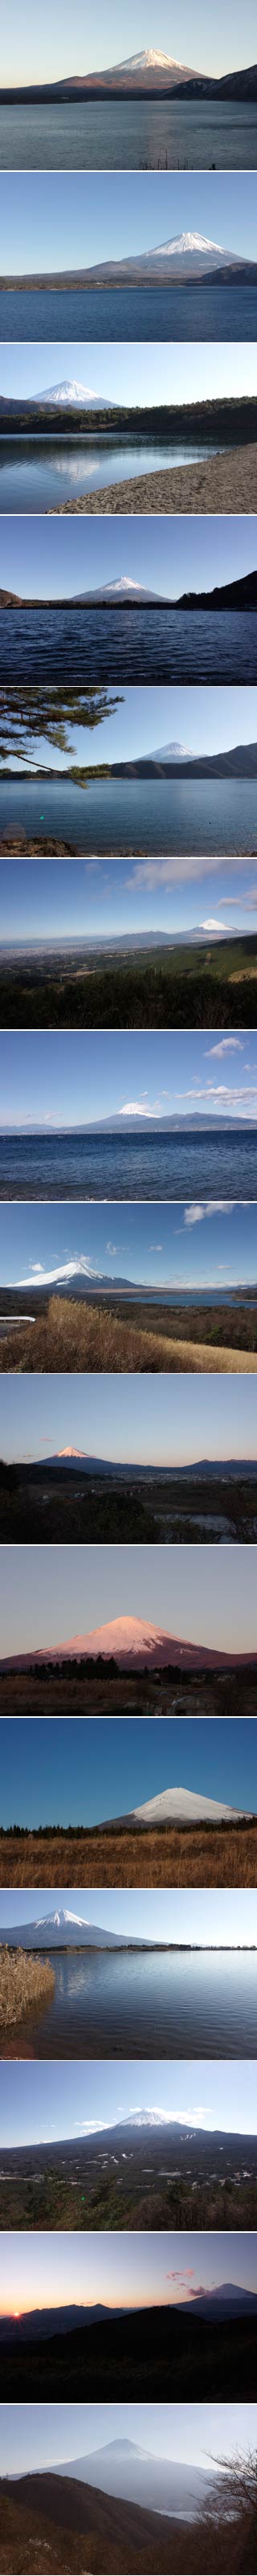 360 degrees view of Mt. Fuji